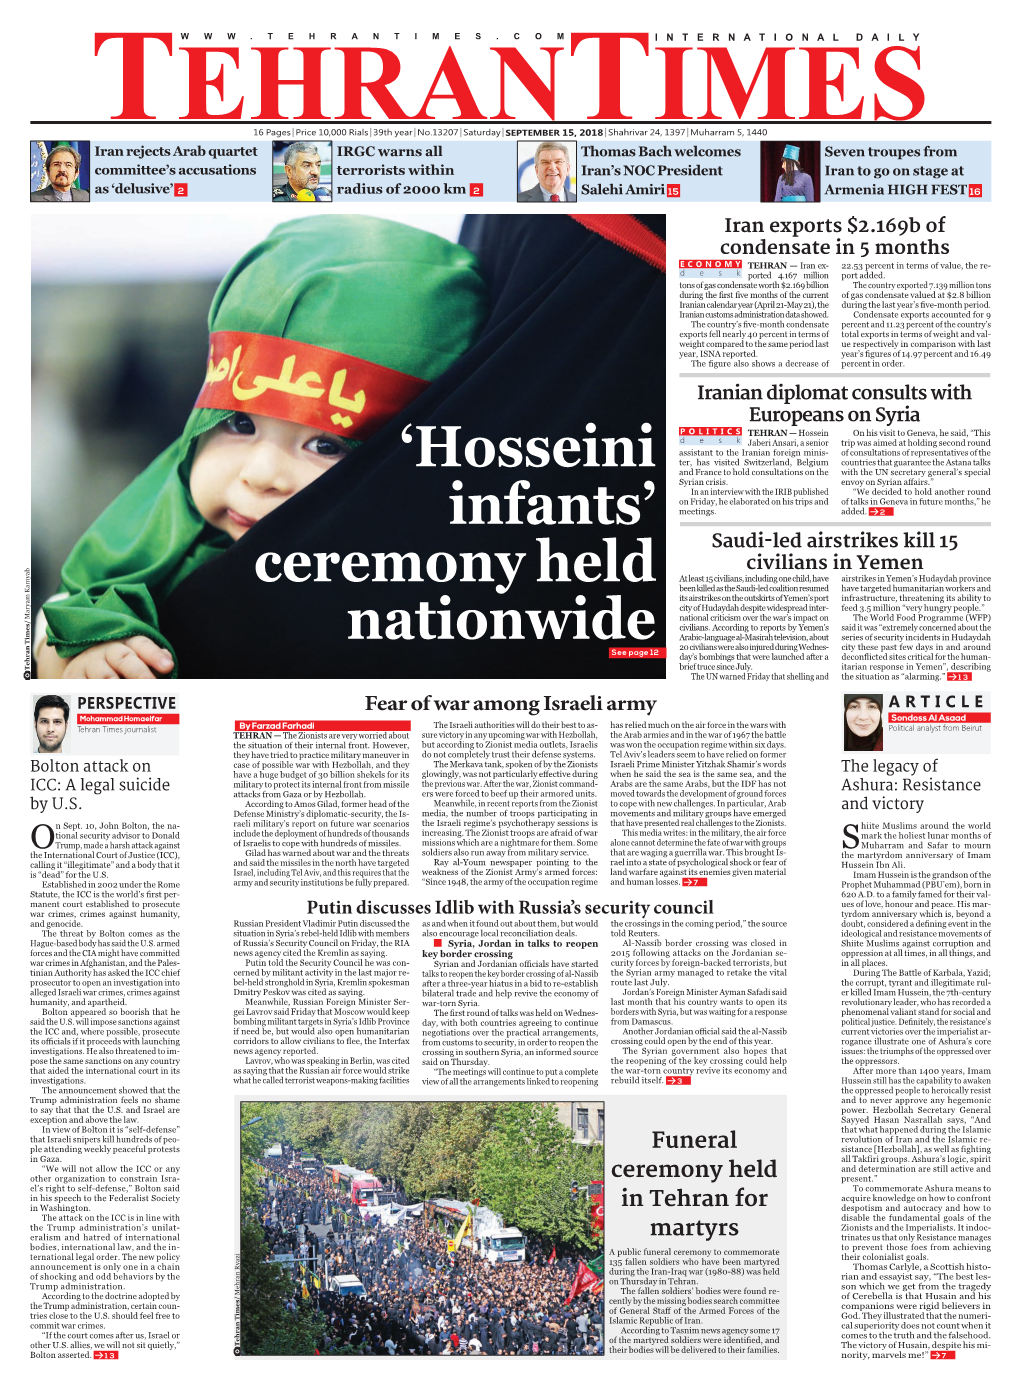 'Hosseini Infants' Ceremony Held Nationwide